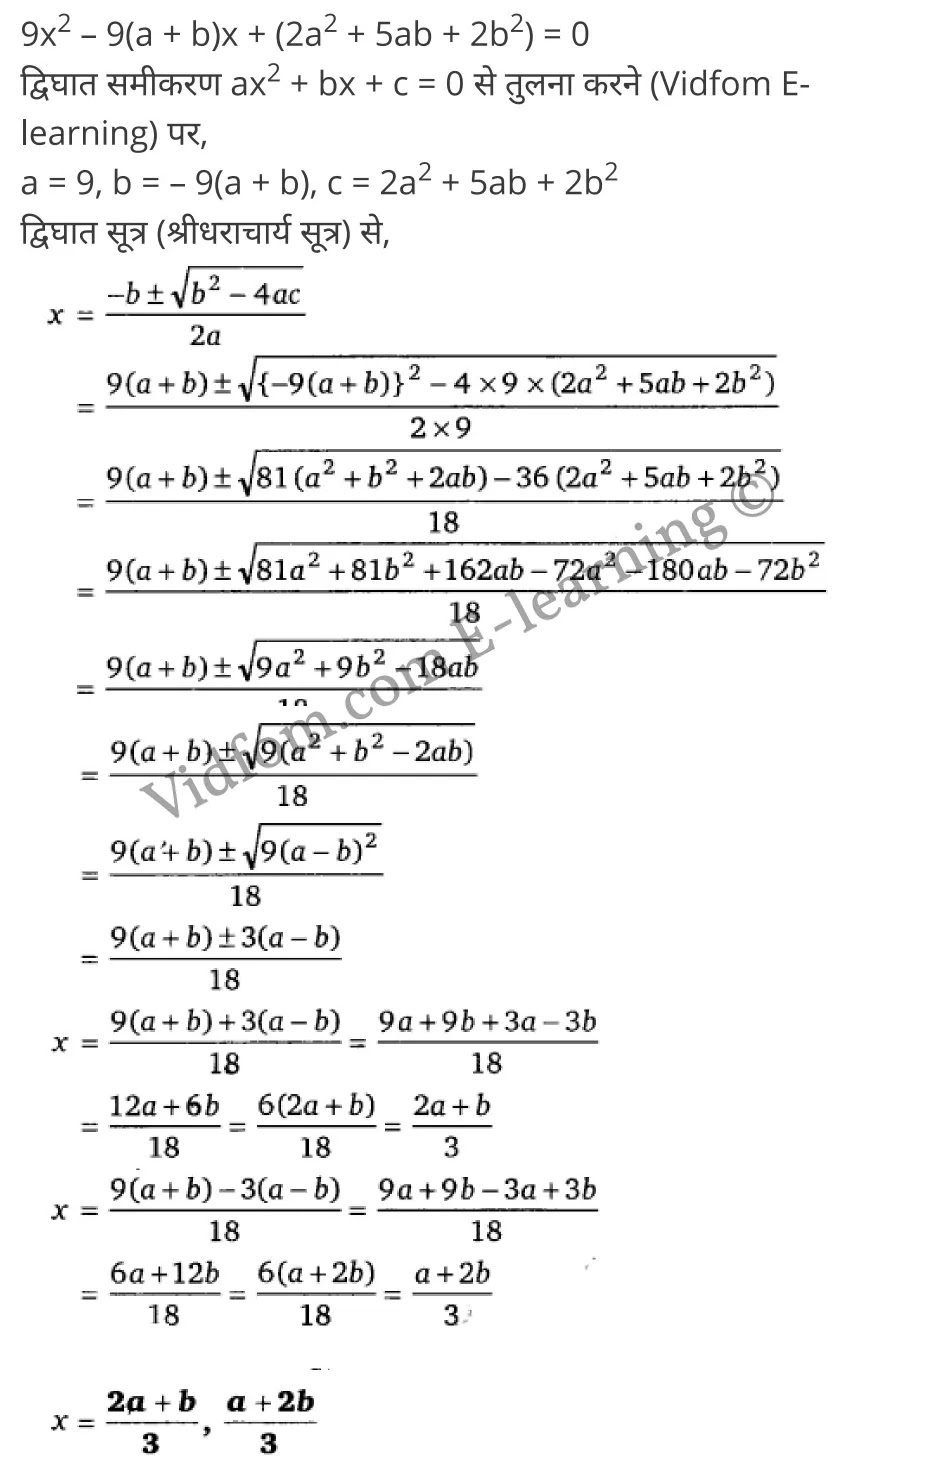 Class 10 Chapter 4 Quadratic Equations (द्विघात समीकरण)  Chapter 4 Quadratic Equations Ex 4.1 Chapter 4 Quadratic Equations Ex 4.2 Chapter 4 Quadratic Equations Ex 4.3 Chapter 4 Quadratic Equations Ex 4.4 Chapter 4 Quadratic Equations Ex 4.5 कक्षा 10 बालाजी गणित  के नोट्स  हिंदी में एनसीईआरटी समाधान,     class 10 Balaji Maths Chapter 4,   class 10 Balaji Maths Chapter 4 ncert solutions in Hindi,   class 10 Balaji Maths Chapter 4 notes in hindi,   class 10 Balaji Maths Chapter 4 question answer,   class 10 Balaji Maths Chapter 4 notes,   class 10 Balaji Maths Chapter 4 class 10 Balaji Maths Chapter 4 in  hindi,    class 10 Balaji Maths Chapter 4 important questions in  hindi,   class 10 Balaji Maths Chapter 4 notes in hindi,    class 10 Balaji Maths Chapter 4 test,   class 10 Balaji Maths Chapter 4 pdf,   class 10 Balaji Maths Chapter 4 notes pdf,   class 10 Balaji Maths Chapter 4 exercise solutions,   class 10 Balaji Maths Chapter 4 notes study rankers,   class 10 Balaji Maths Chapter 4 notes,    class 10 Balaji Maths Chapter 4  class 10  notes pdf,   class 10 Balaji Maths Chapter 4 class 10  notes  ncert,   class 10 Balaji Maths Chapter 4 class 10 pdf,   class 10 Balaji Maths Chapter 4  book,   class 10 Balaji Maths Chapter 4 quiz class 10  ,    10  th class 10 Balaji Maths Chapter 4  book up board,   up board 10  th class 10 Balaji Maths Chapter 4 notes,  class 10 Balaji Maths,   class 10 Balaji Maths ncert solutions in Hindi,   class 10 Balaji Maths notes in hindi,   class 10 Balaji Maths question answer,   class 10 Balaji Maths notes,  class 10 Balaji Maths class 10 Balaji Maths Chapter 4 in  hindi,    class 10 Balaji Maths important questions in  hindi,   class 10 Balaji Maths notes in hindi,    class 10 Balaji Maths test,  class 10 Balaji Maths class 10 Balaji Maths Chapter 4 pdf,   class 10 Balaji Maths notes pdf,   class 10 Balaji Maths exercise solutions,   class 10 Balaji Maths,  class 10 Balaji Maths notes study rankers,   class 10 Balaji Maths notes,  class 10 Balaji Maths notes,   class 10 Balaji Maths  class 10  notes pdf,   class 10 Balaji Maths class 10  notes  ncert,   class 10 Balaji Maths class 10 pdf,   class 10 Balaji Maths  book,  class 10 Balaji Maths quiz class 10  ,  10  th class 10 Balaji Maths    book up board,    up board 10  th class 10 Balaji Maths notes,      कक्षा 10 बालाजी गणित अध्याय 4 ,  कक्षा 10 बालाजी गणित, कक्षा 10 बालाजी गणित अध्याय 4  के नोट्स हिंदी में,  कक्षा 10 का हिंदी अध्याय 4 का प्रश्न उत्तर,  कक्षा 10 बालाजी गणित अध्याय 4  के नोट्स,  10 कक्षा बालाजी गणित  हिंदी में, कक्षा 10 बालाजी गणित अध्याय 4  हिंदी में,  कक्षा 10 बालाजी गणित अध्याय 4  महत्वपूर्ण प्रश्न हिंदी में, कक्षा 10   हिंदी के नोट्स  हिंदी में, बालाजी गणित हिंदी में  कक्षा 10 नोट्स pdf,    बालाजी गणित हिंदी में  कक्षा 10 नोट्स 2021 ncert,   बालाजी गणित हिंदी  कक्षा 10 pdf,   बालाजी गणित हिंदी में  पुस्तक,   बालाजी गणित हिंदी में की बुक,   बालाजी गणित हिंदी में  प्रश्नोत्तरी class 10 ,  बिहार बोर्ड 10  पुस्तक वीं हिंदी नोट्स,    बालाजी गणित कक्षा 10 नोट्स 2021 ncert,   बालाजी गणित  कक्षा 10 pdf,   बालाजी गणित  पुस्तक,   बालाजी गणित  प्रश्नोत्तरी class 10, कक्षा 10 बालाजी गणित,  कक्षा 10 बालाजी गणित  के नोट्स हिंदी में,  कक्षा 10 का हिंदी का प्रश्न उत्तर,  कक्षा 10 बालाजी गणित  के नोट्स,  10 कक्षा हिंदी 2021  हिंदी में, कक्षा 10 बालाजी गणित  हिंदी में,  कक्षा 10 बालाजी गणित  महत्वपूर्ण प्रश्न हिंदी में, कक्षा 10 बालाजी गणित  नोट्स  हिंदी में,